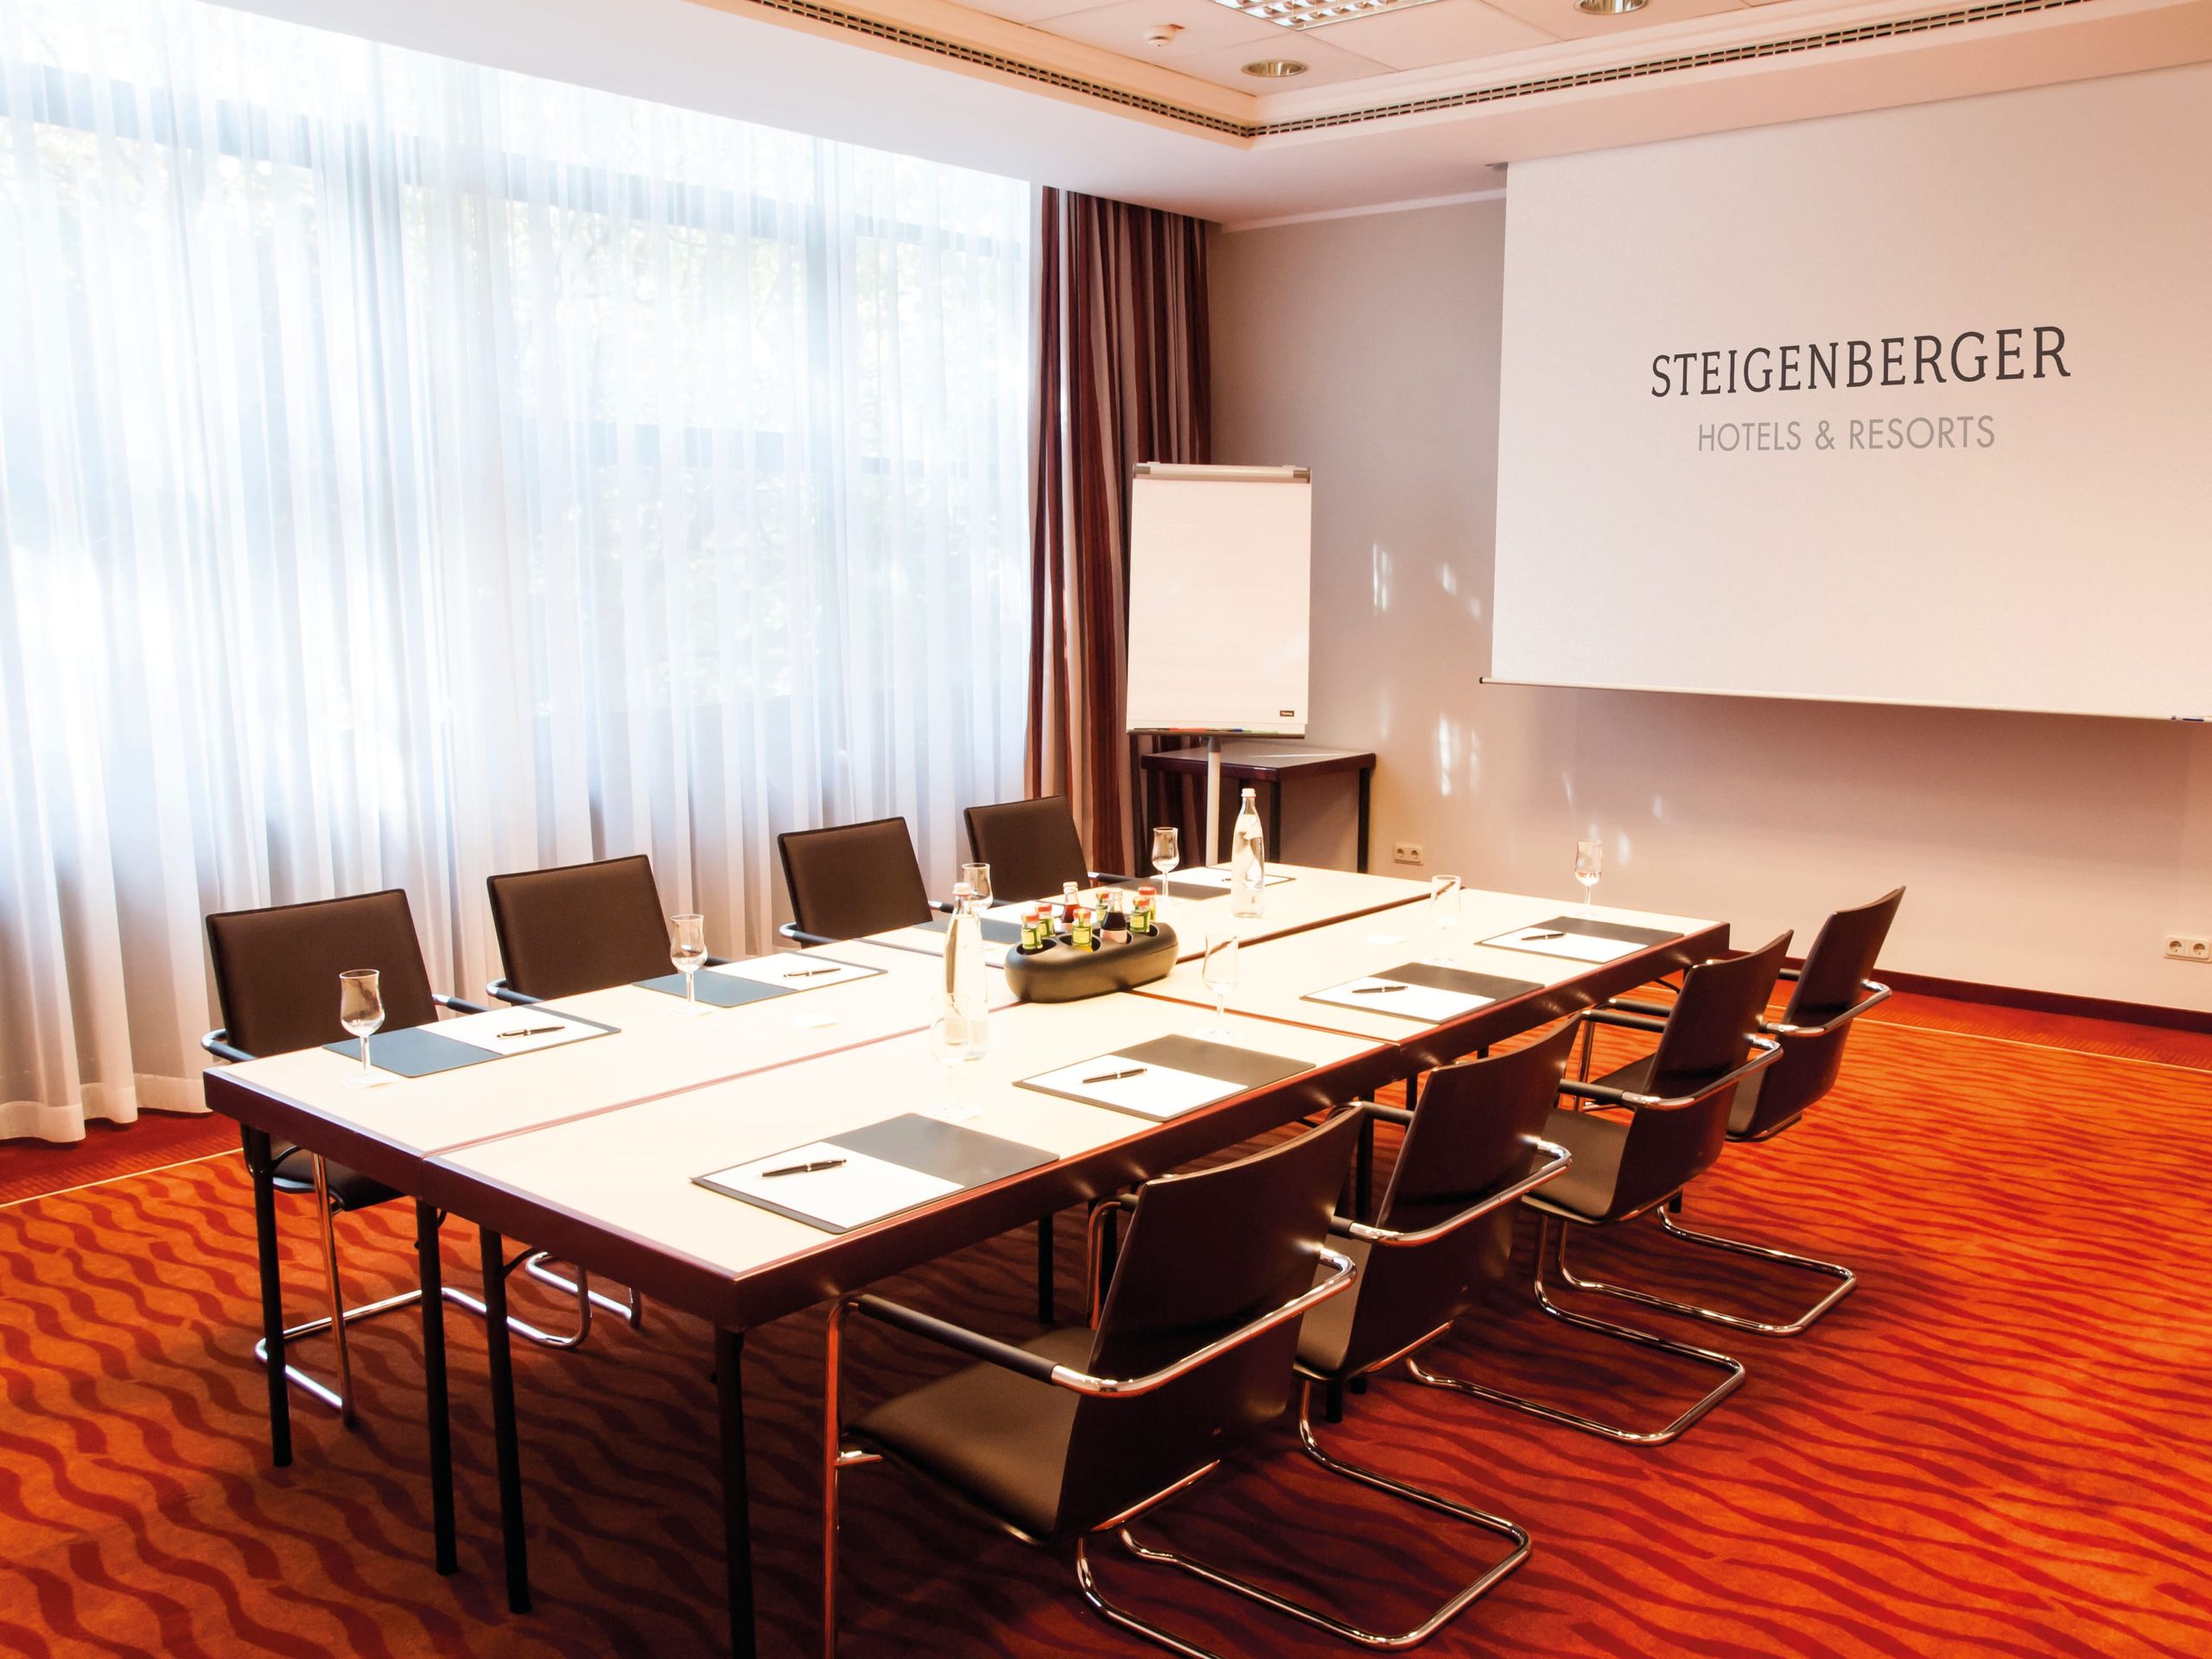 Steigenberger Hotel Dortmund - Reunião